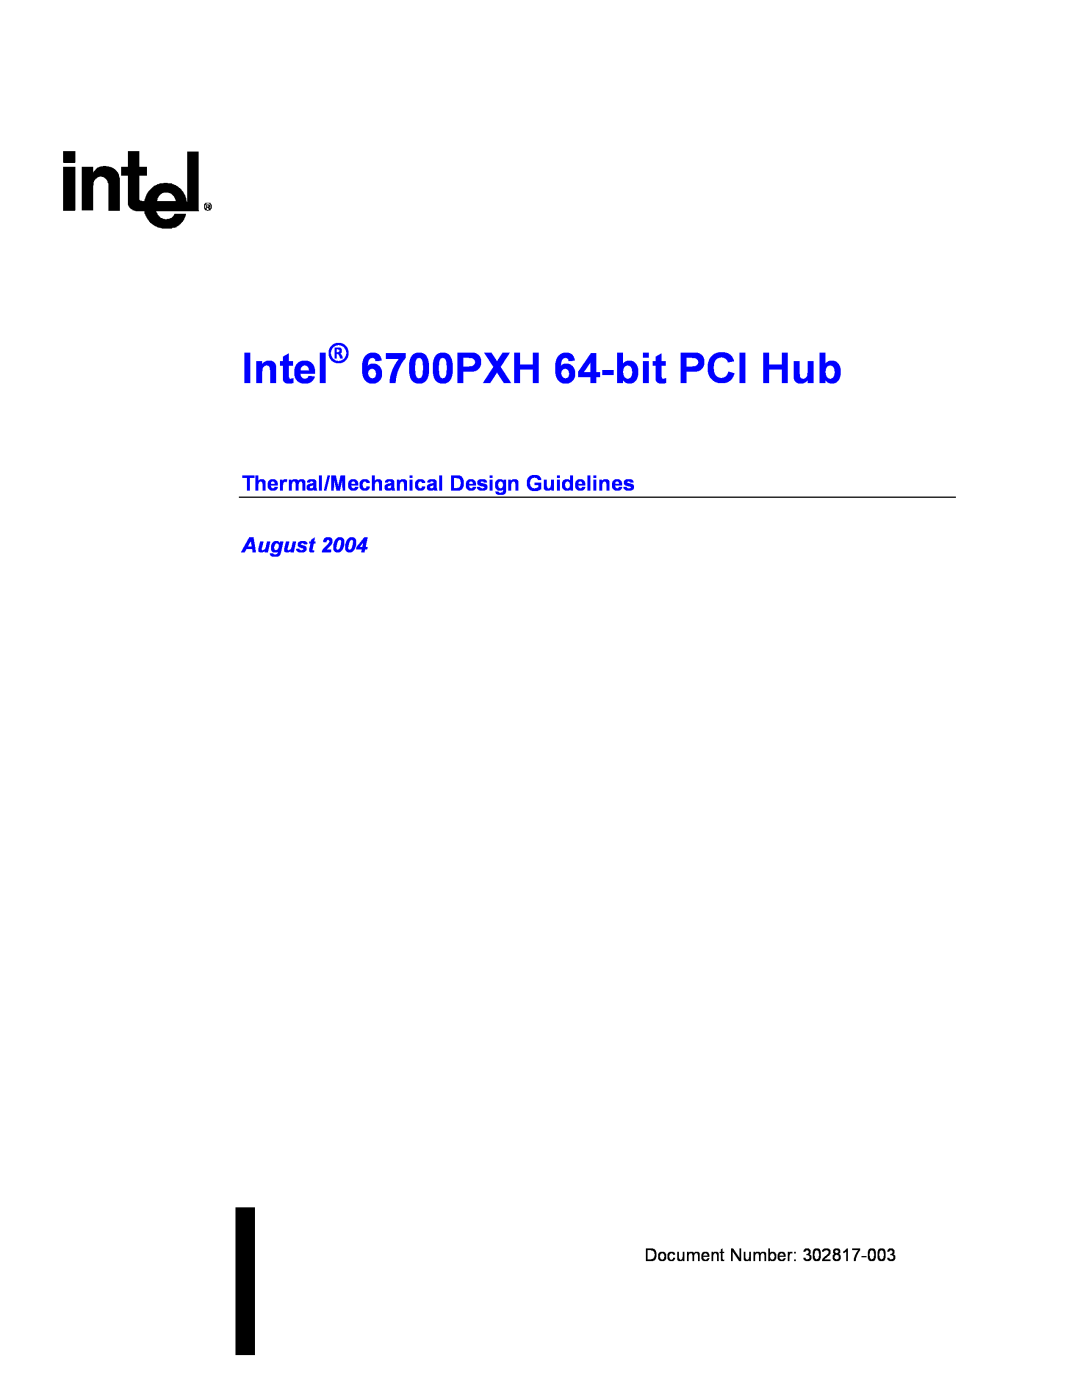 Intel manual Thermal/Mechanical Design Guidelines, Intel 6700PXH 64-bit PCI Hub, August 